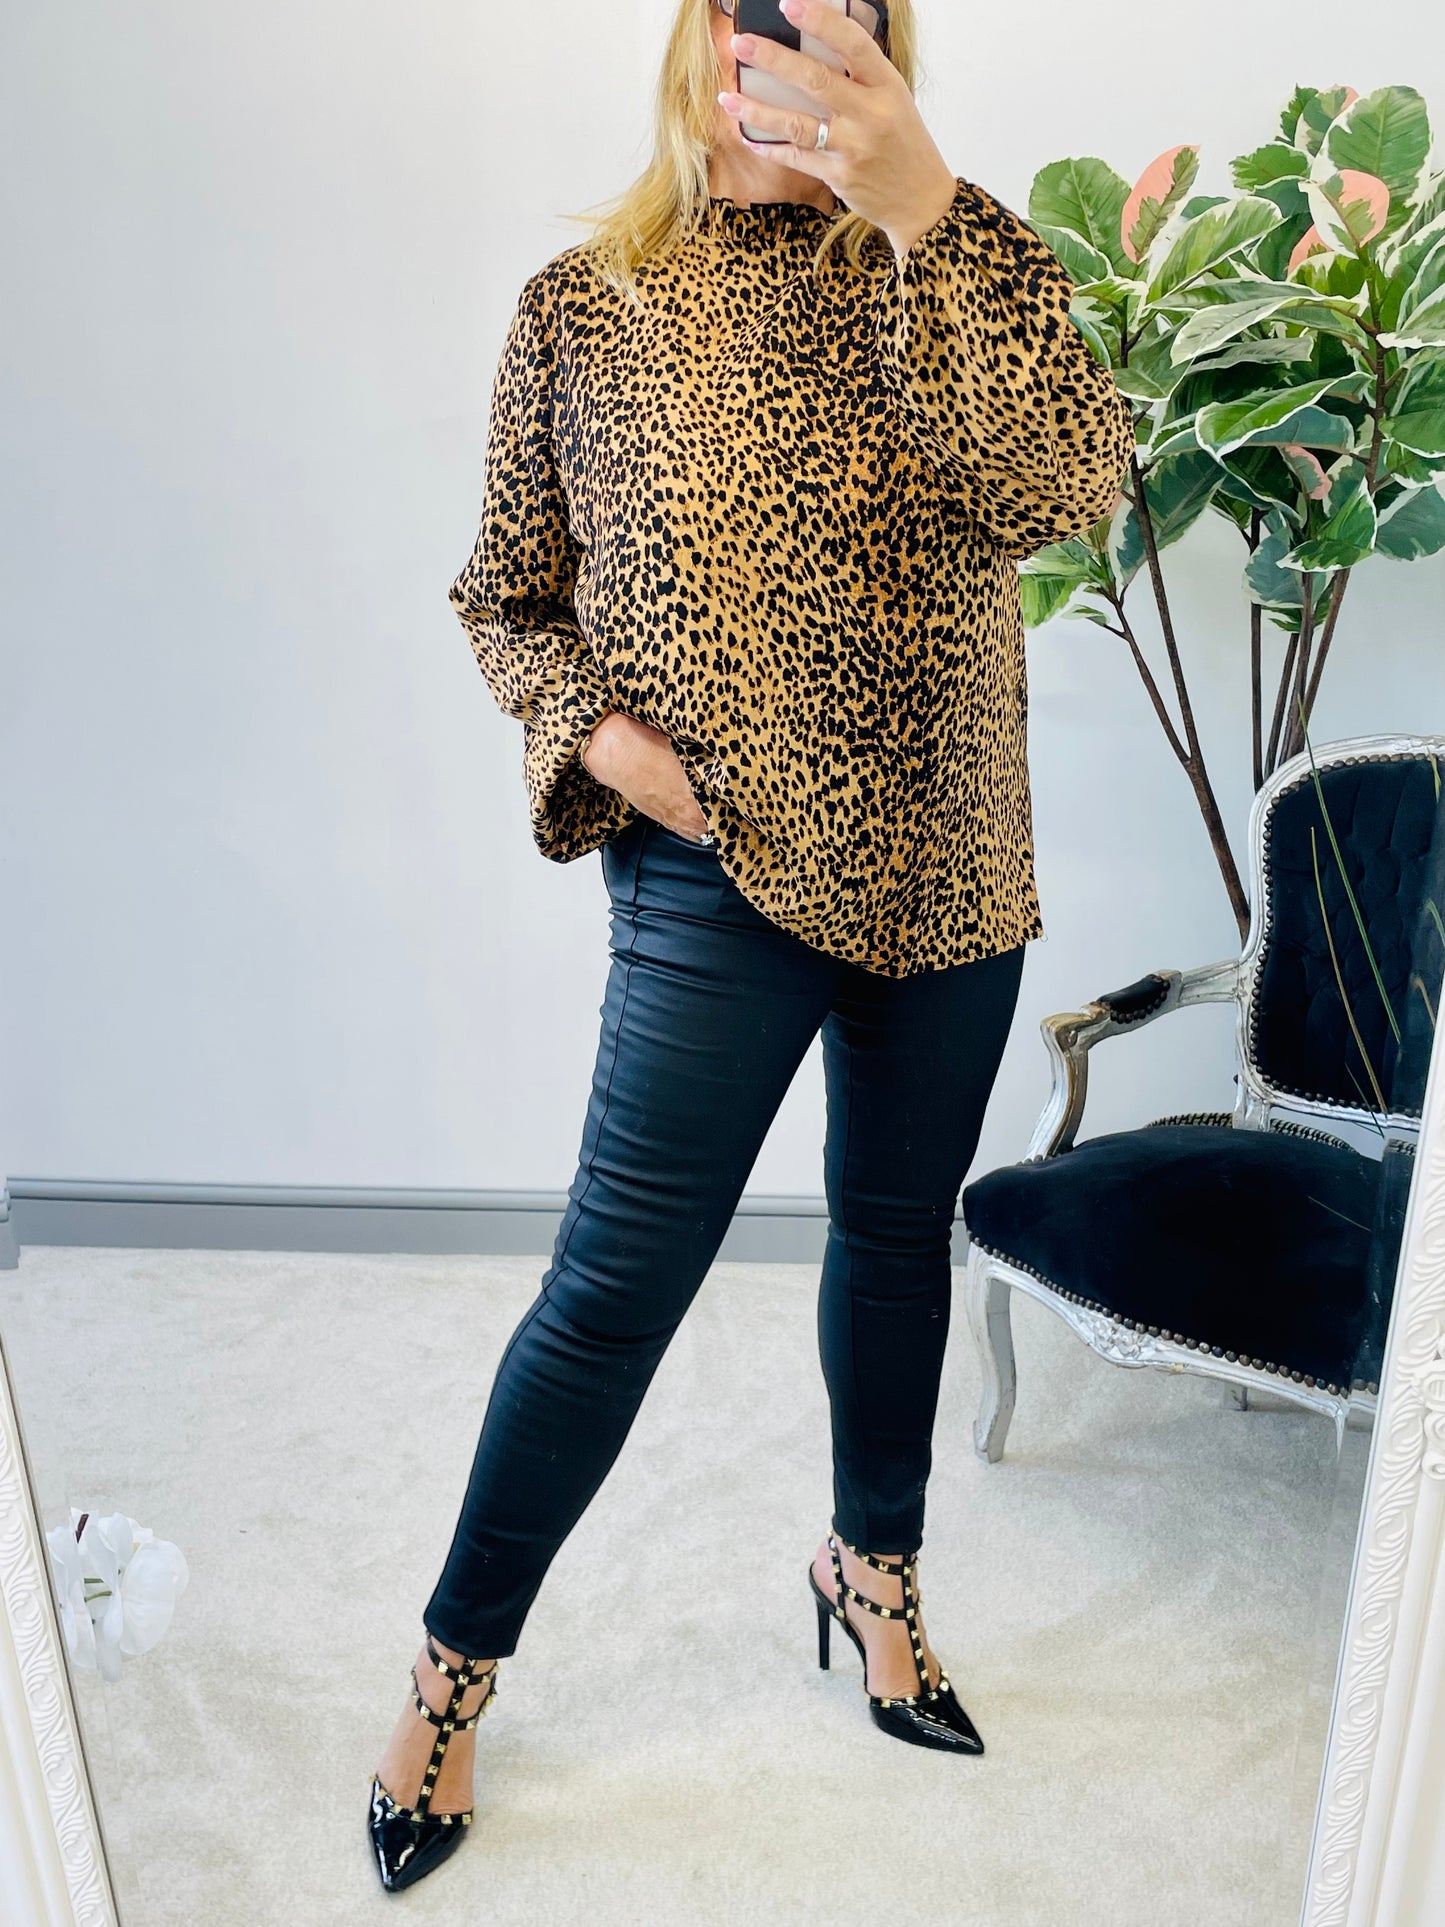 The CHLOE leopard print blouse